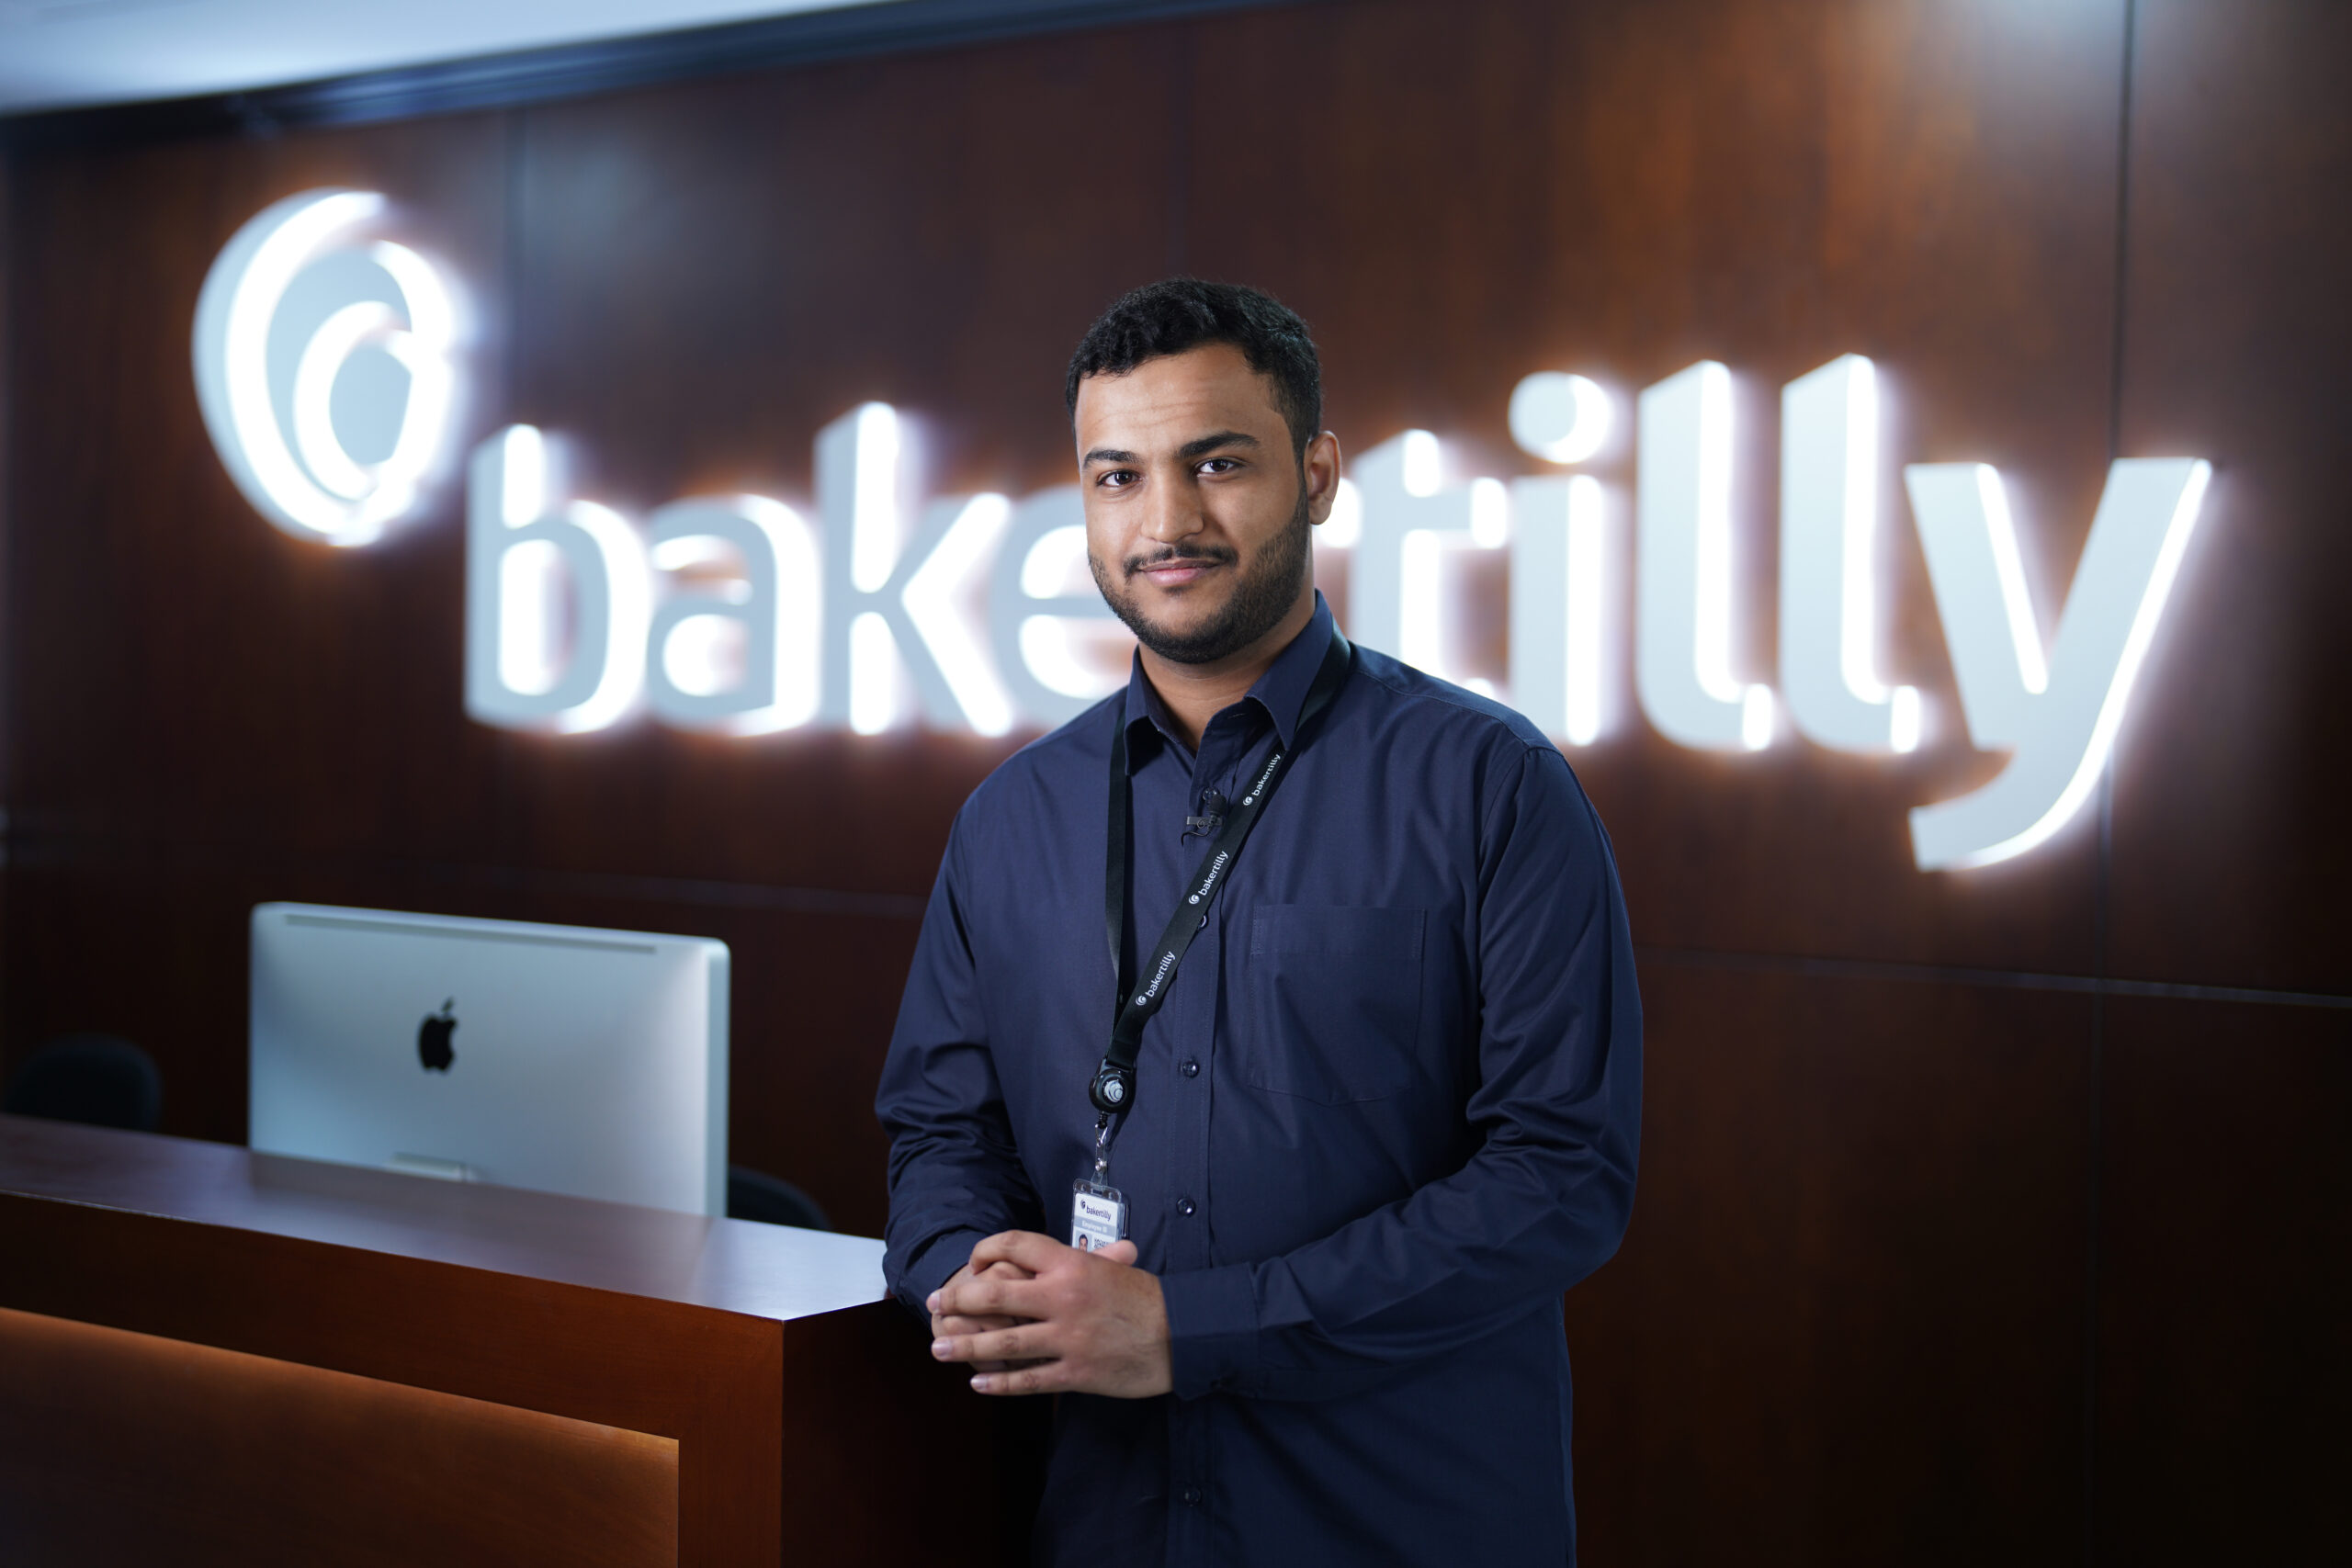 Associate consultant – bakertilly Company